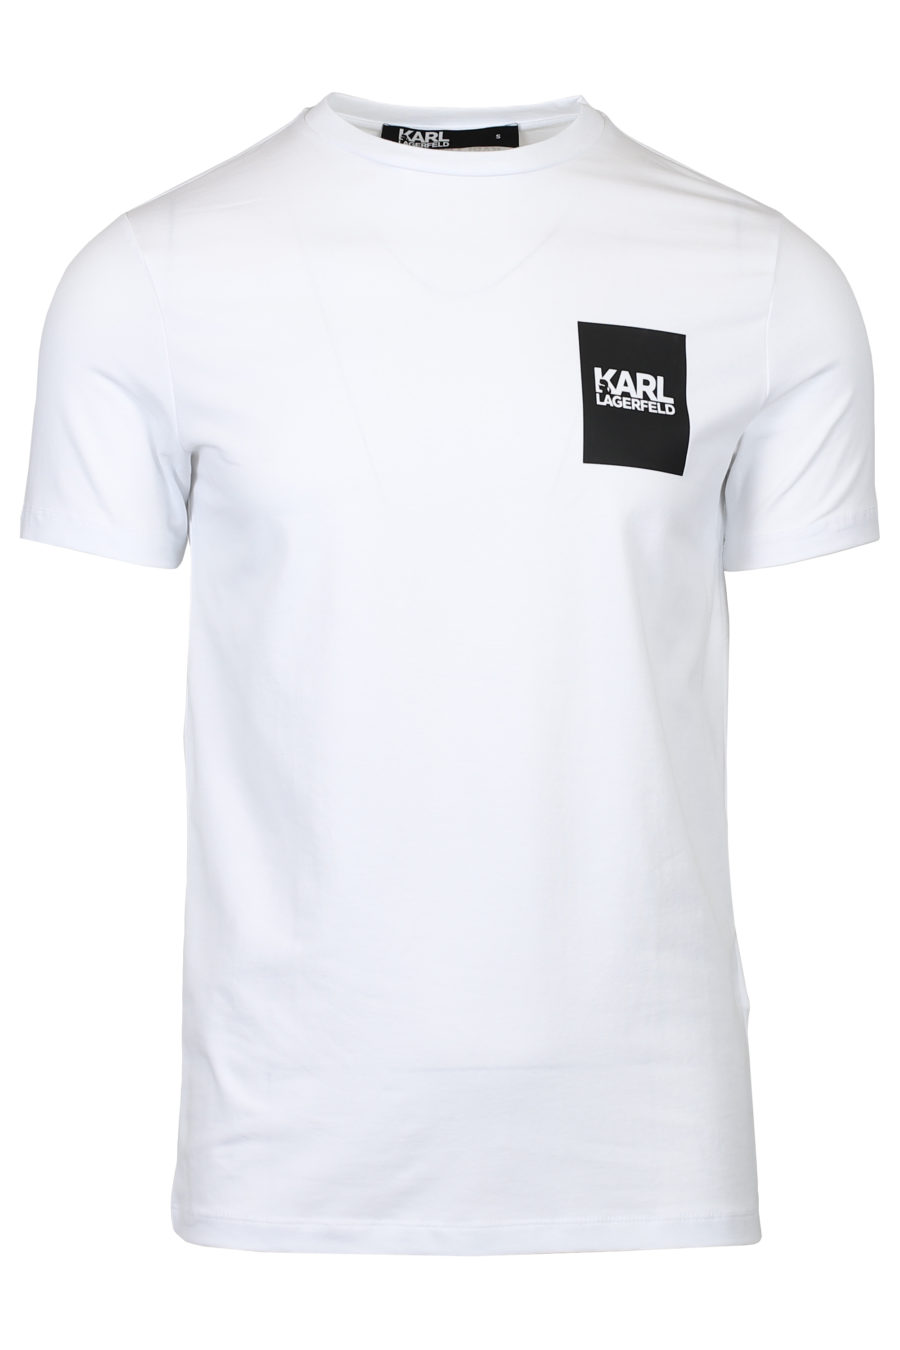 T-Shirt weißes Logo schwarze Farbe - IMG 2039